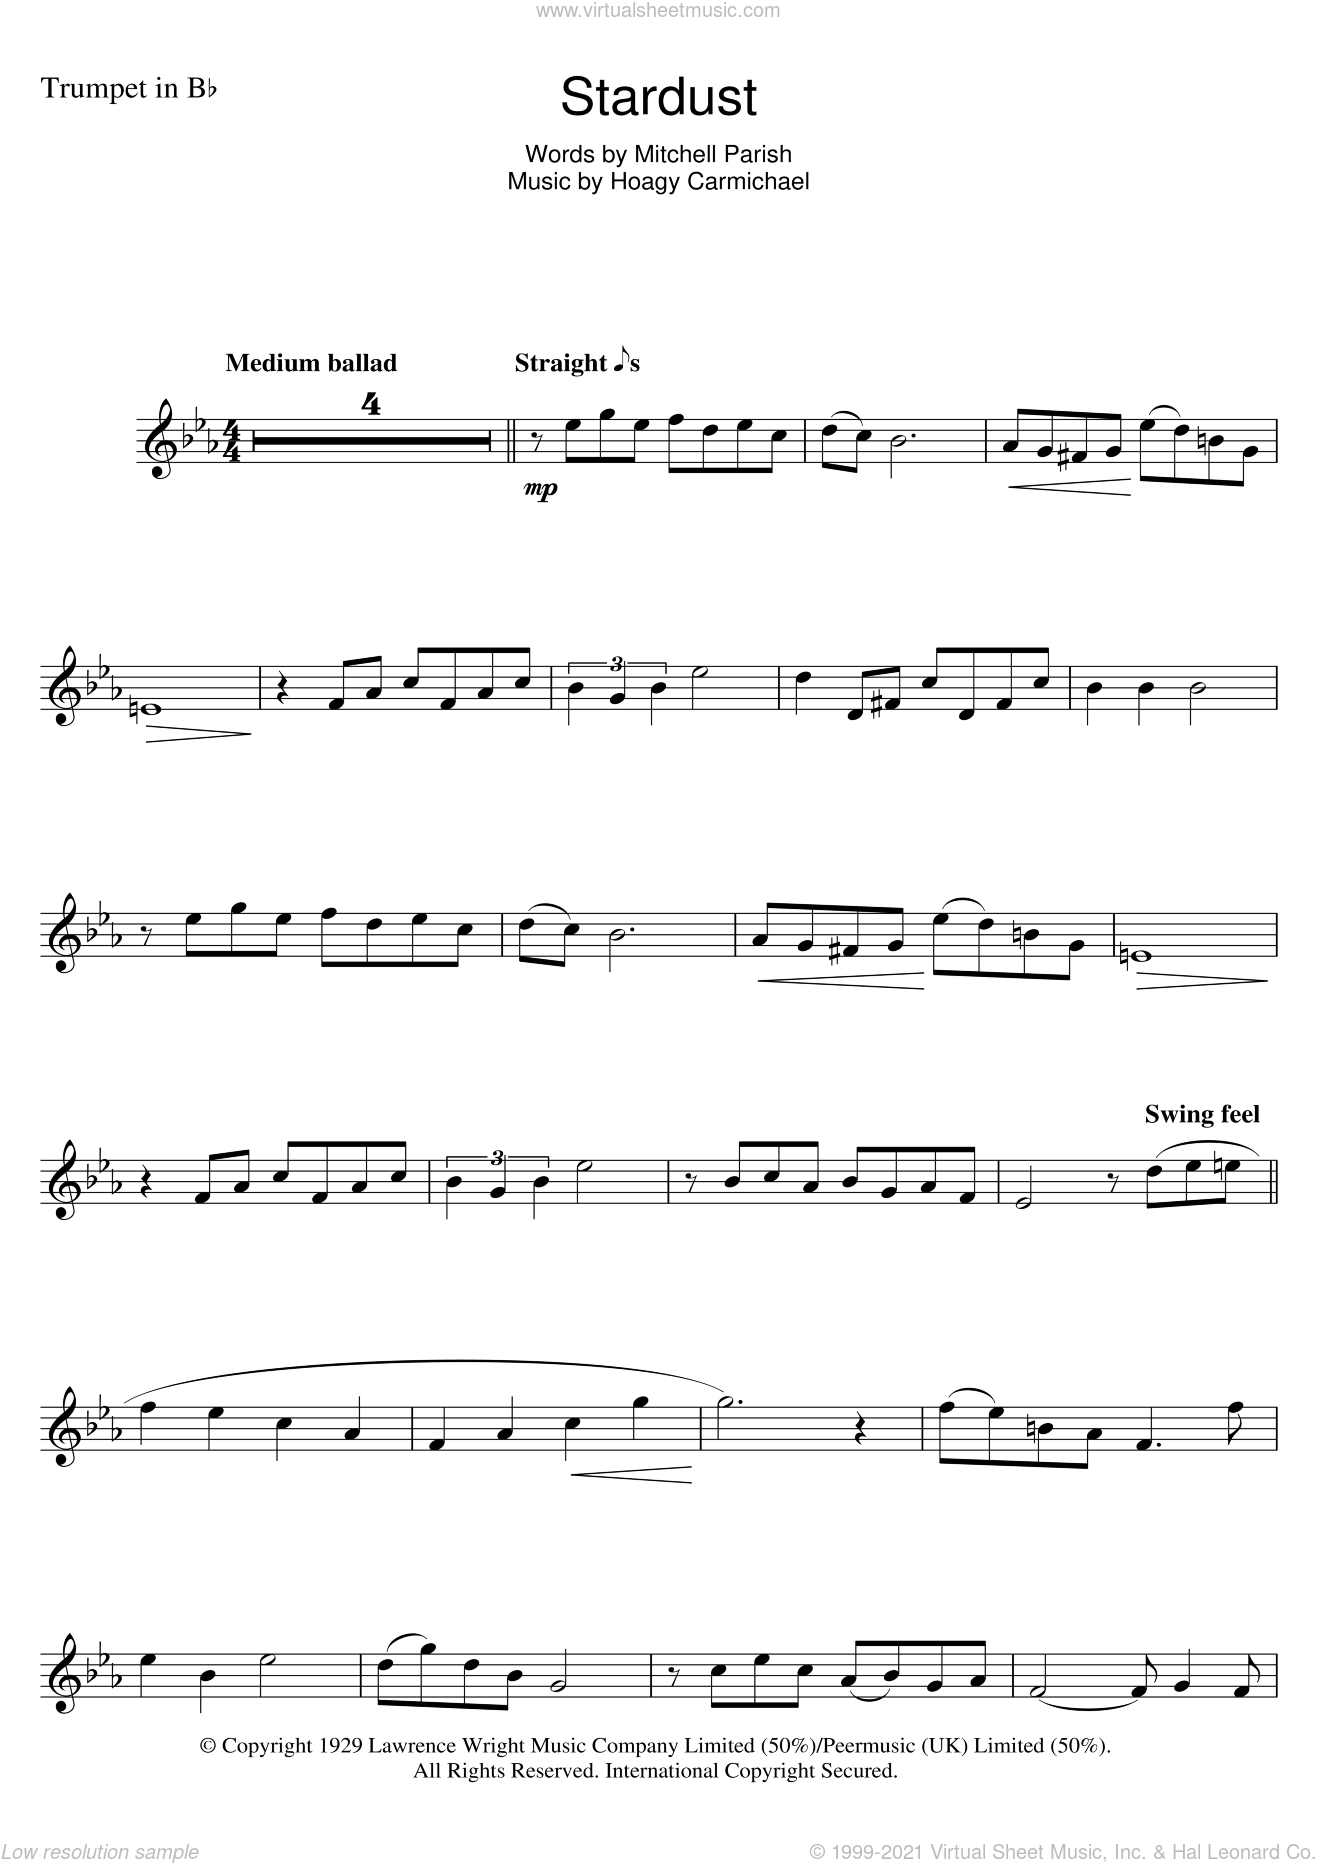 Carmichael - Stardust sheet music for trumpet solo [PDF]